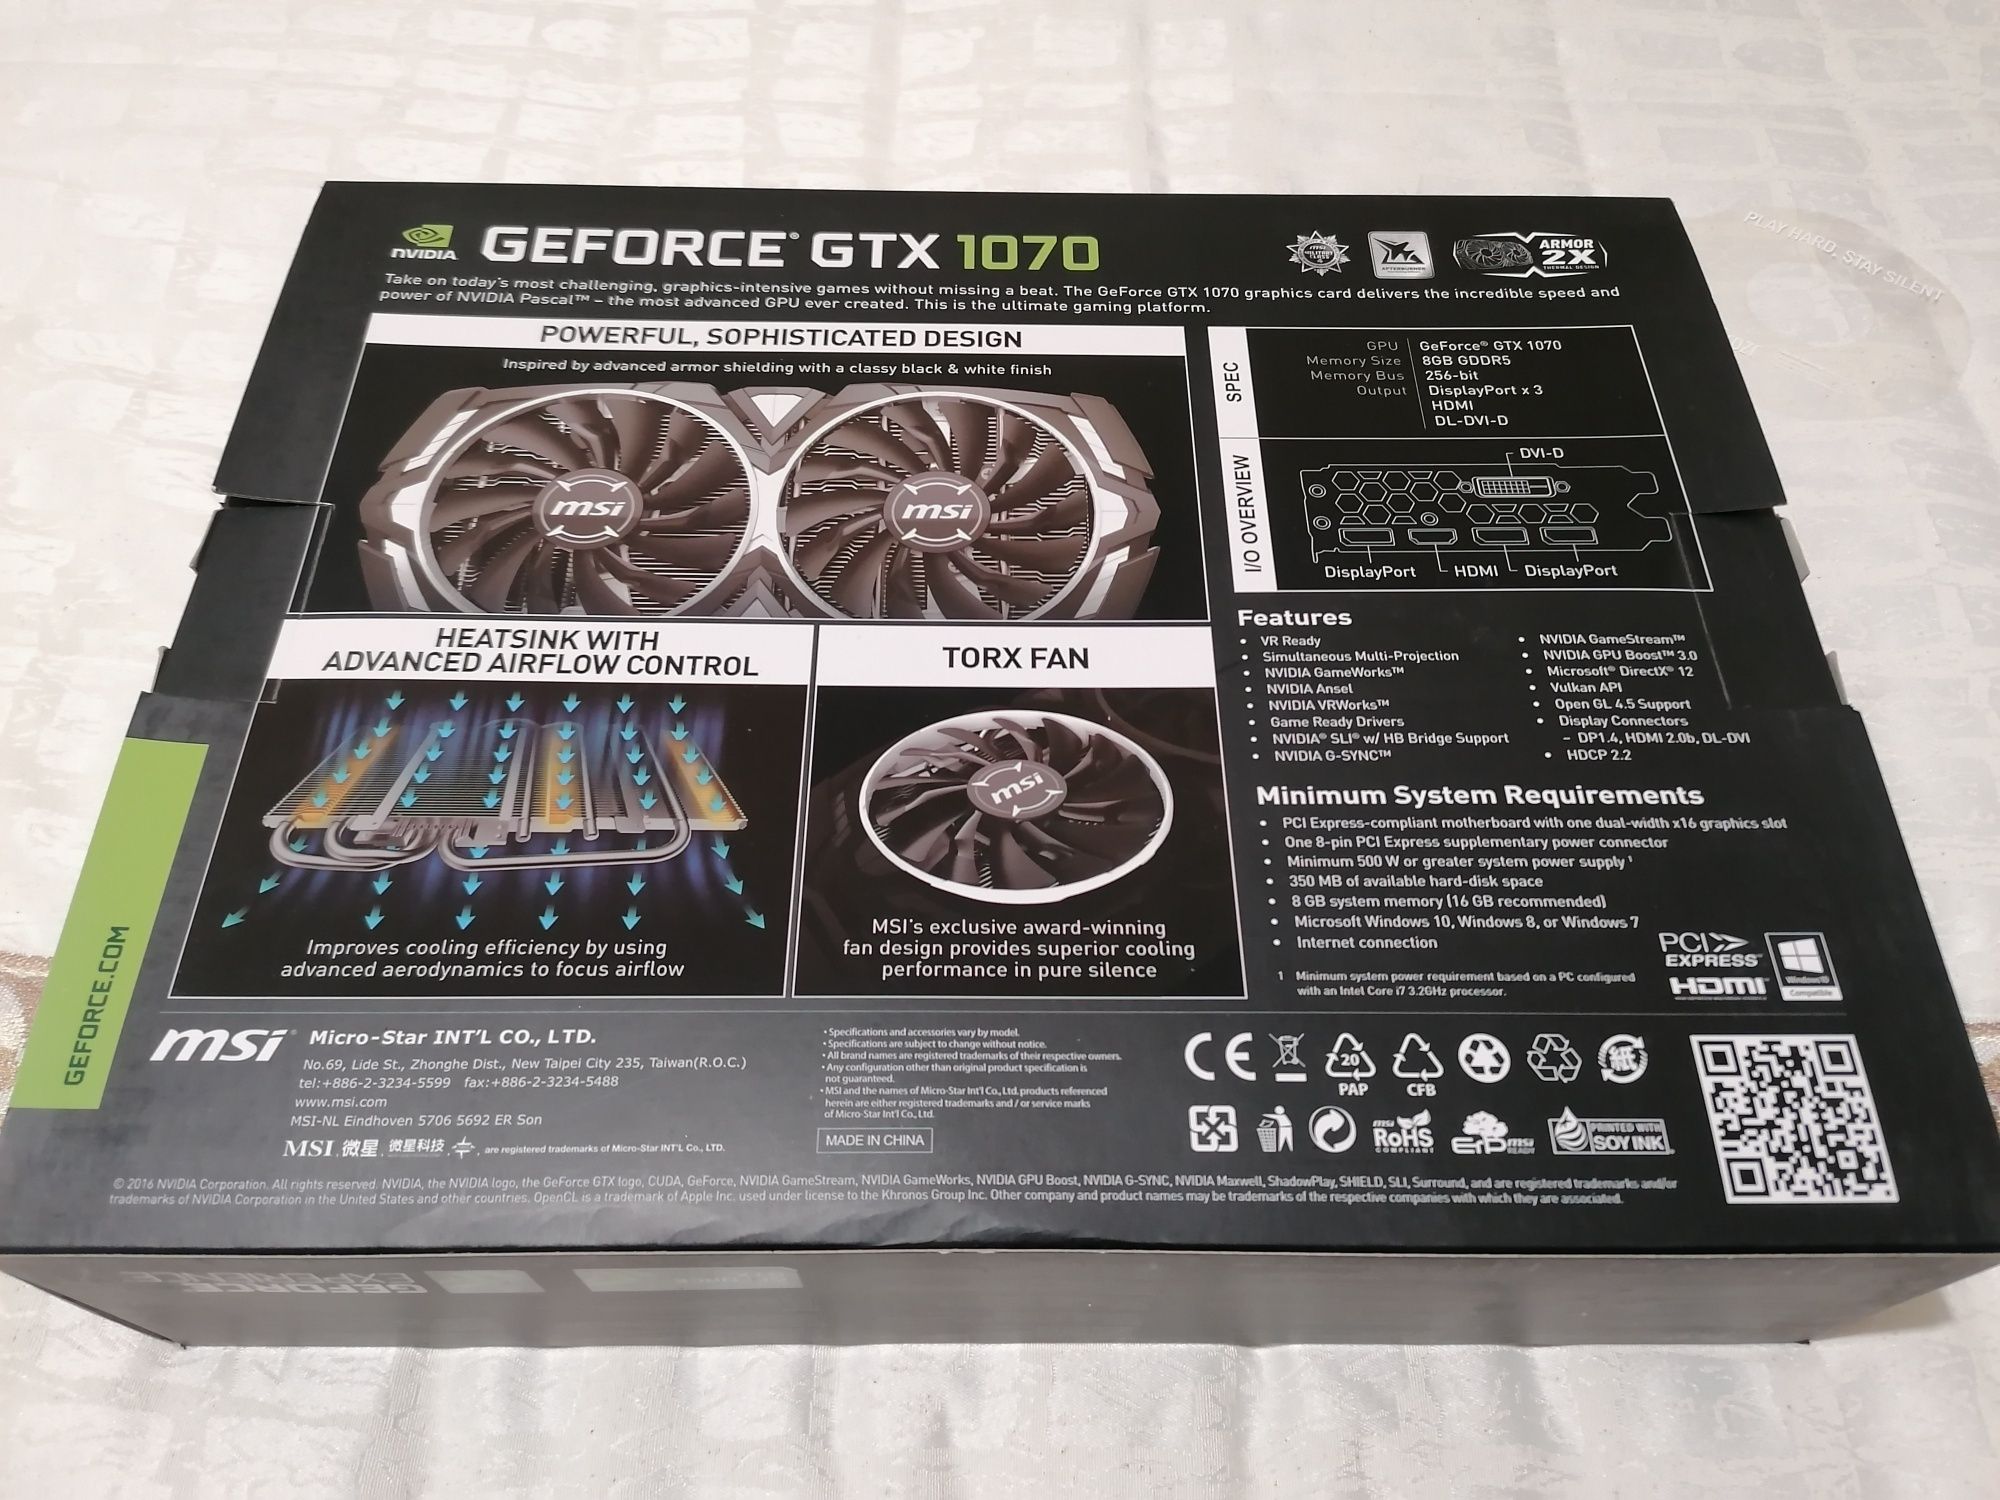 Geforce GTX 1070 OC - 8G - MSI ARMOR
Faço video a comprovar que funcio